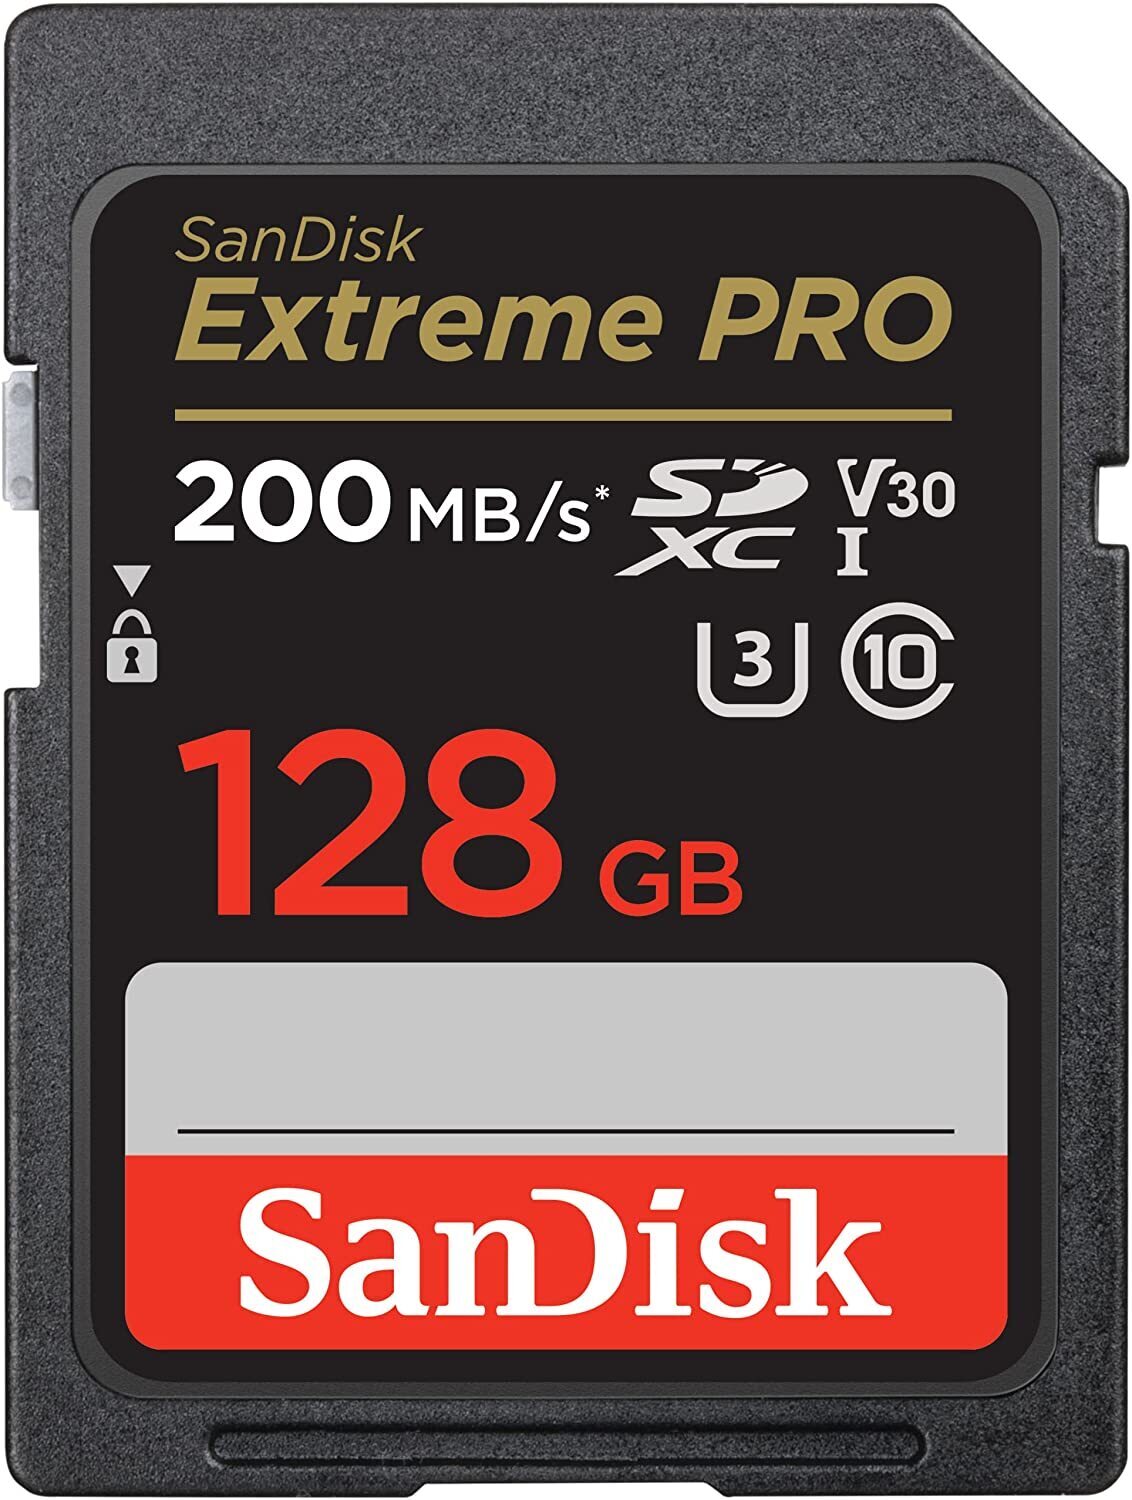 Sandisk Extreme PRO SD 128GB Memory Card DSLR 4K UHD Video Camera SDSDXXD-128G